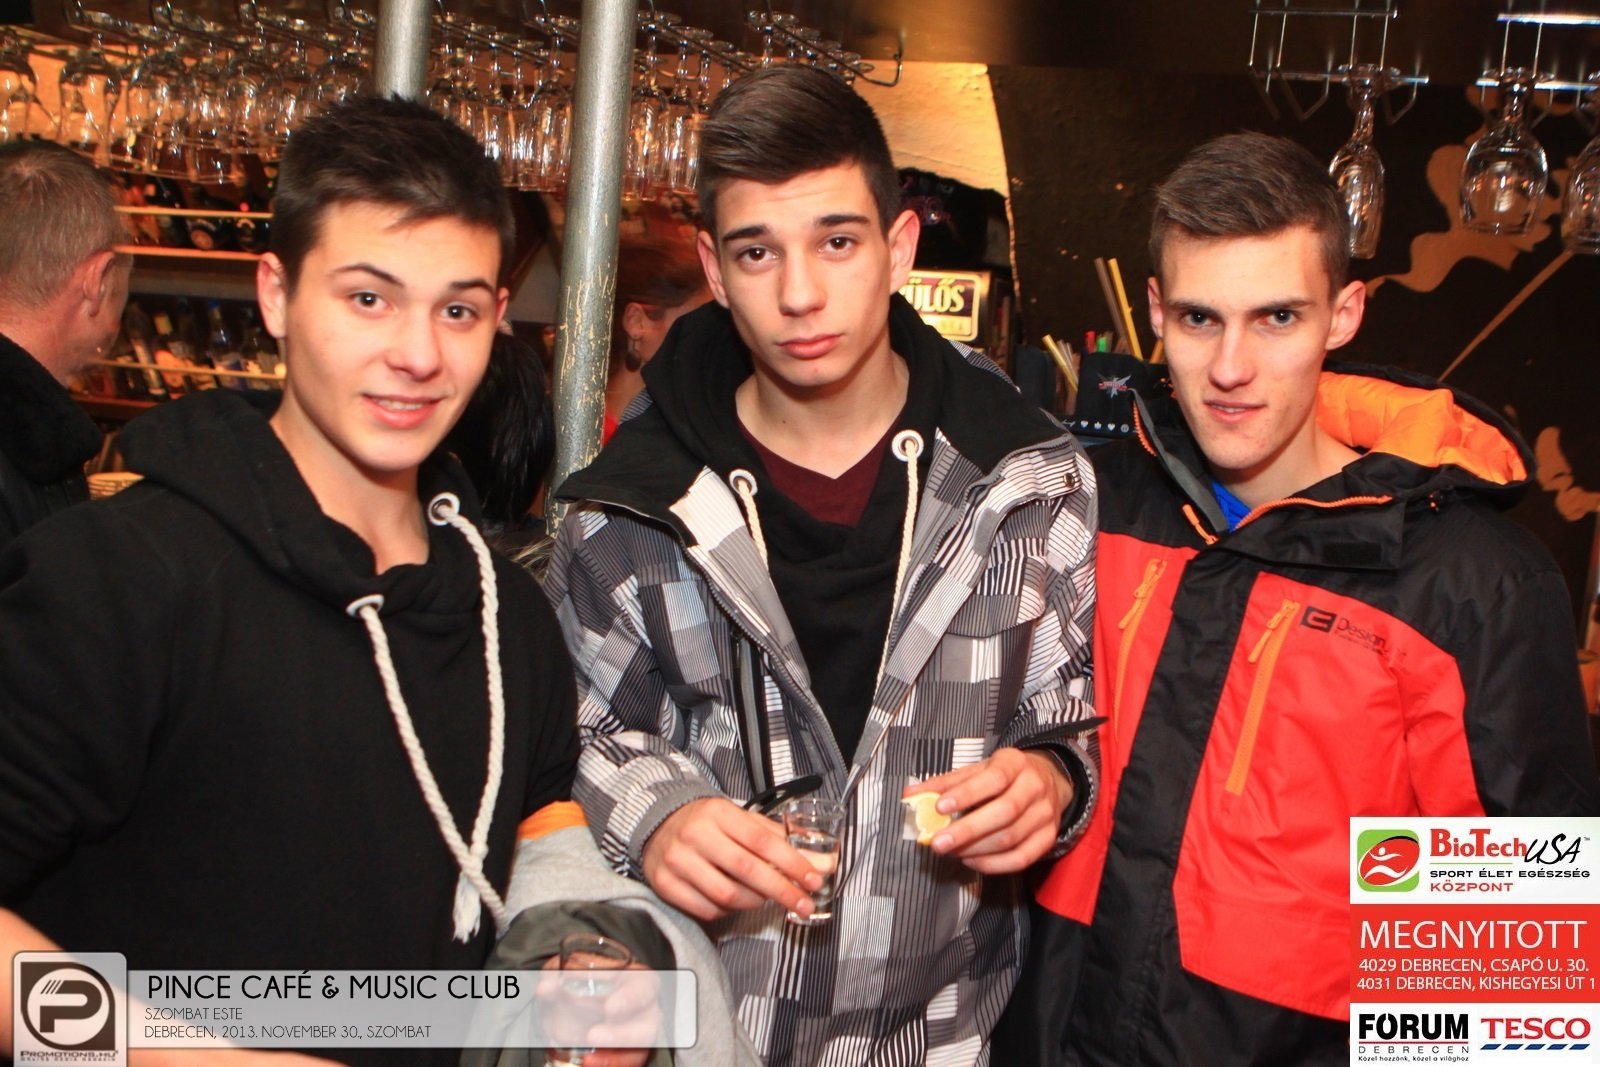 Debrecen, Pince Café & Music Club - 2013. November 30., Szombat